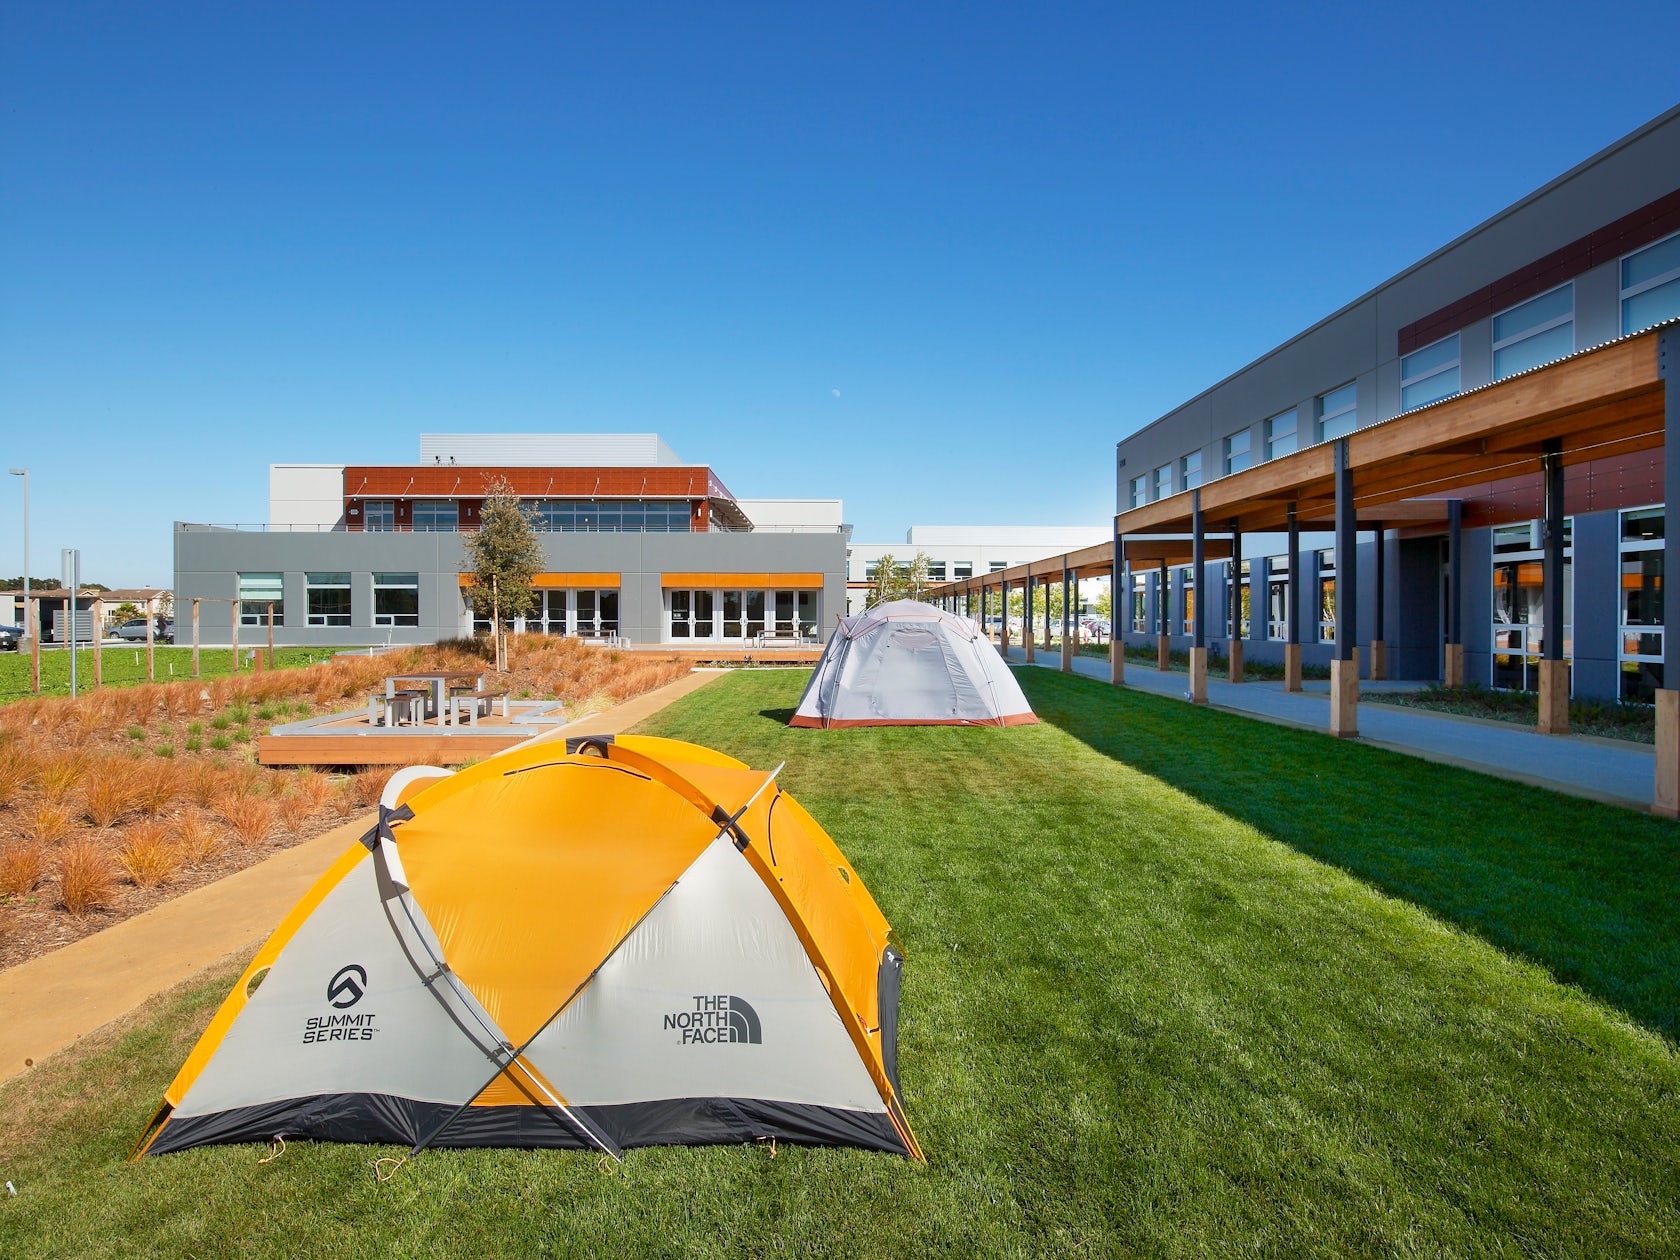 bespotten Boos worden cent VF Outdoor Campus by FME Architecture + Design - Architizer